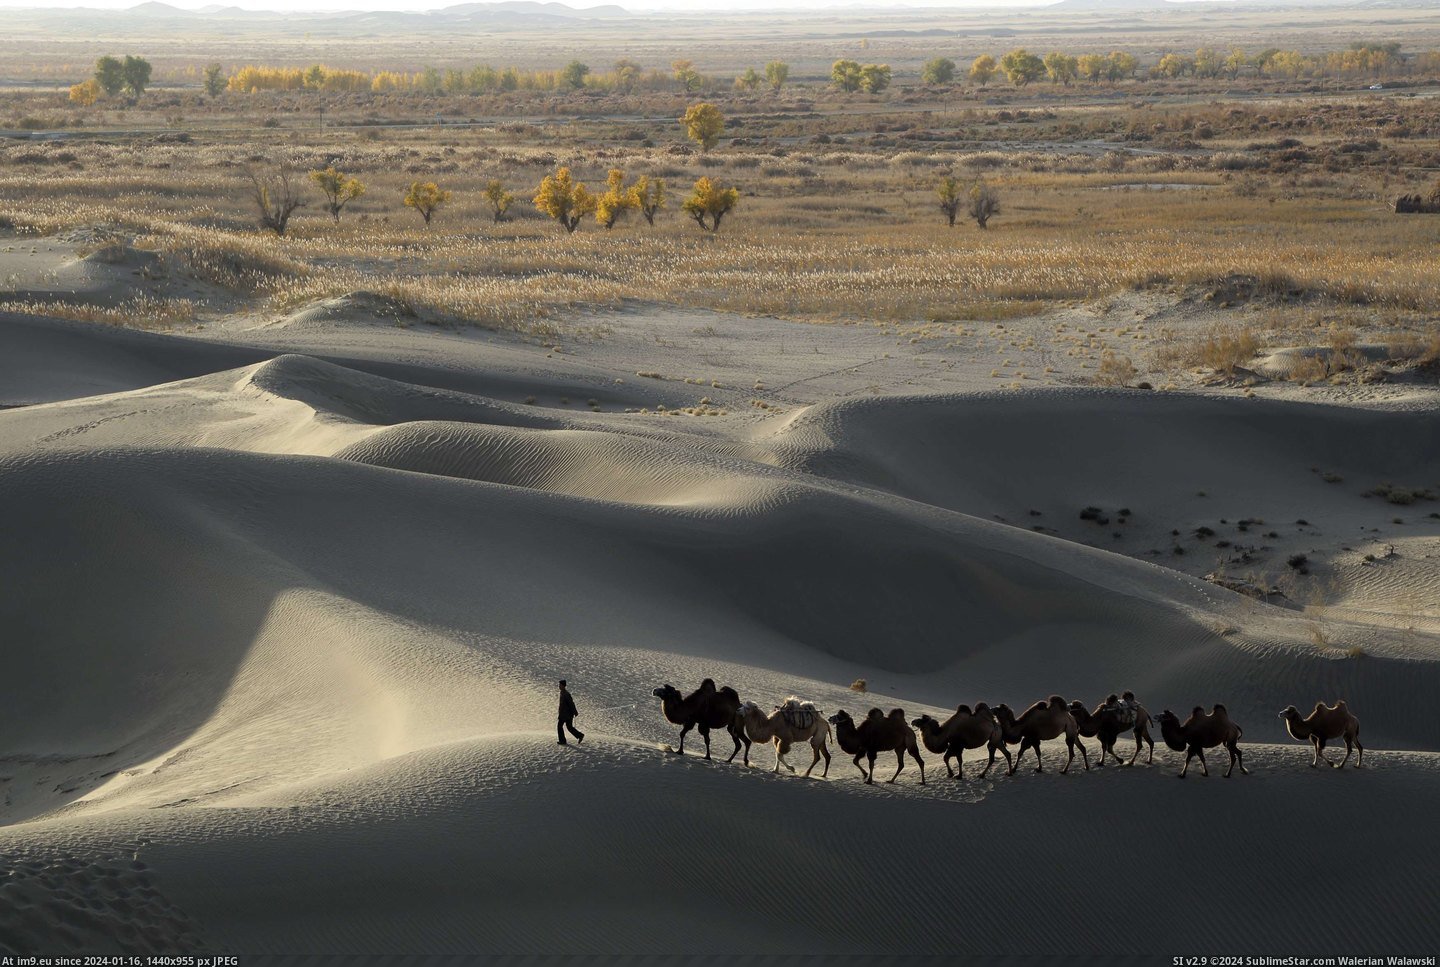 #Man #Desert #Edge #Region #3500x2333 #Taklamakan #Uighur #Leads #Autonomous #Camels #Xinjiang [Earthporn] A man leads camels at the edge of the Taklamakan Desert in Xinjiang Uighur Autonomous Region [3500x2333] Pic. (Image of album My r/EARTHPORN favs))